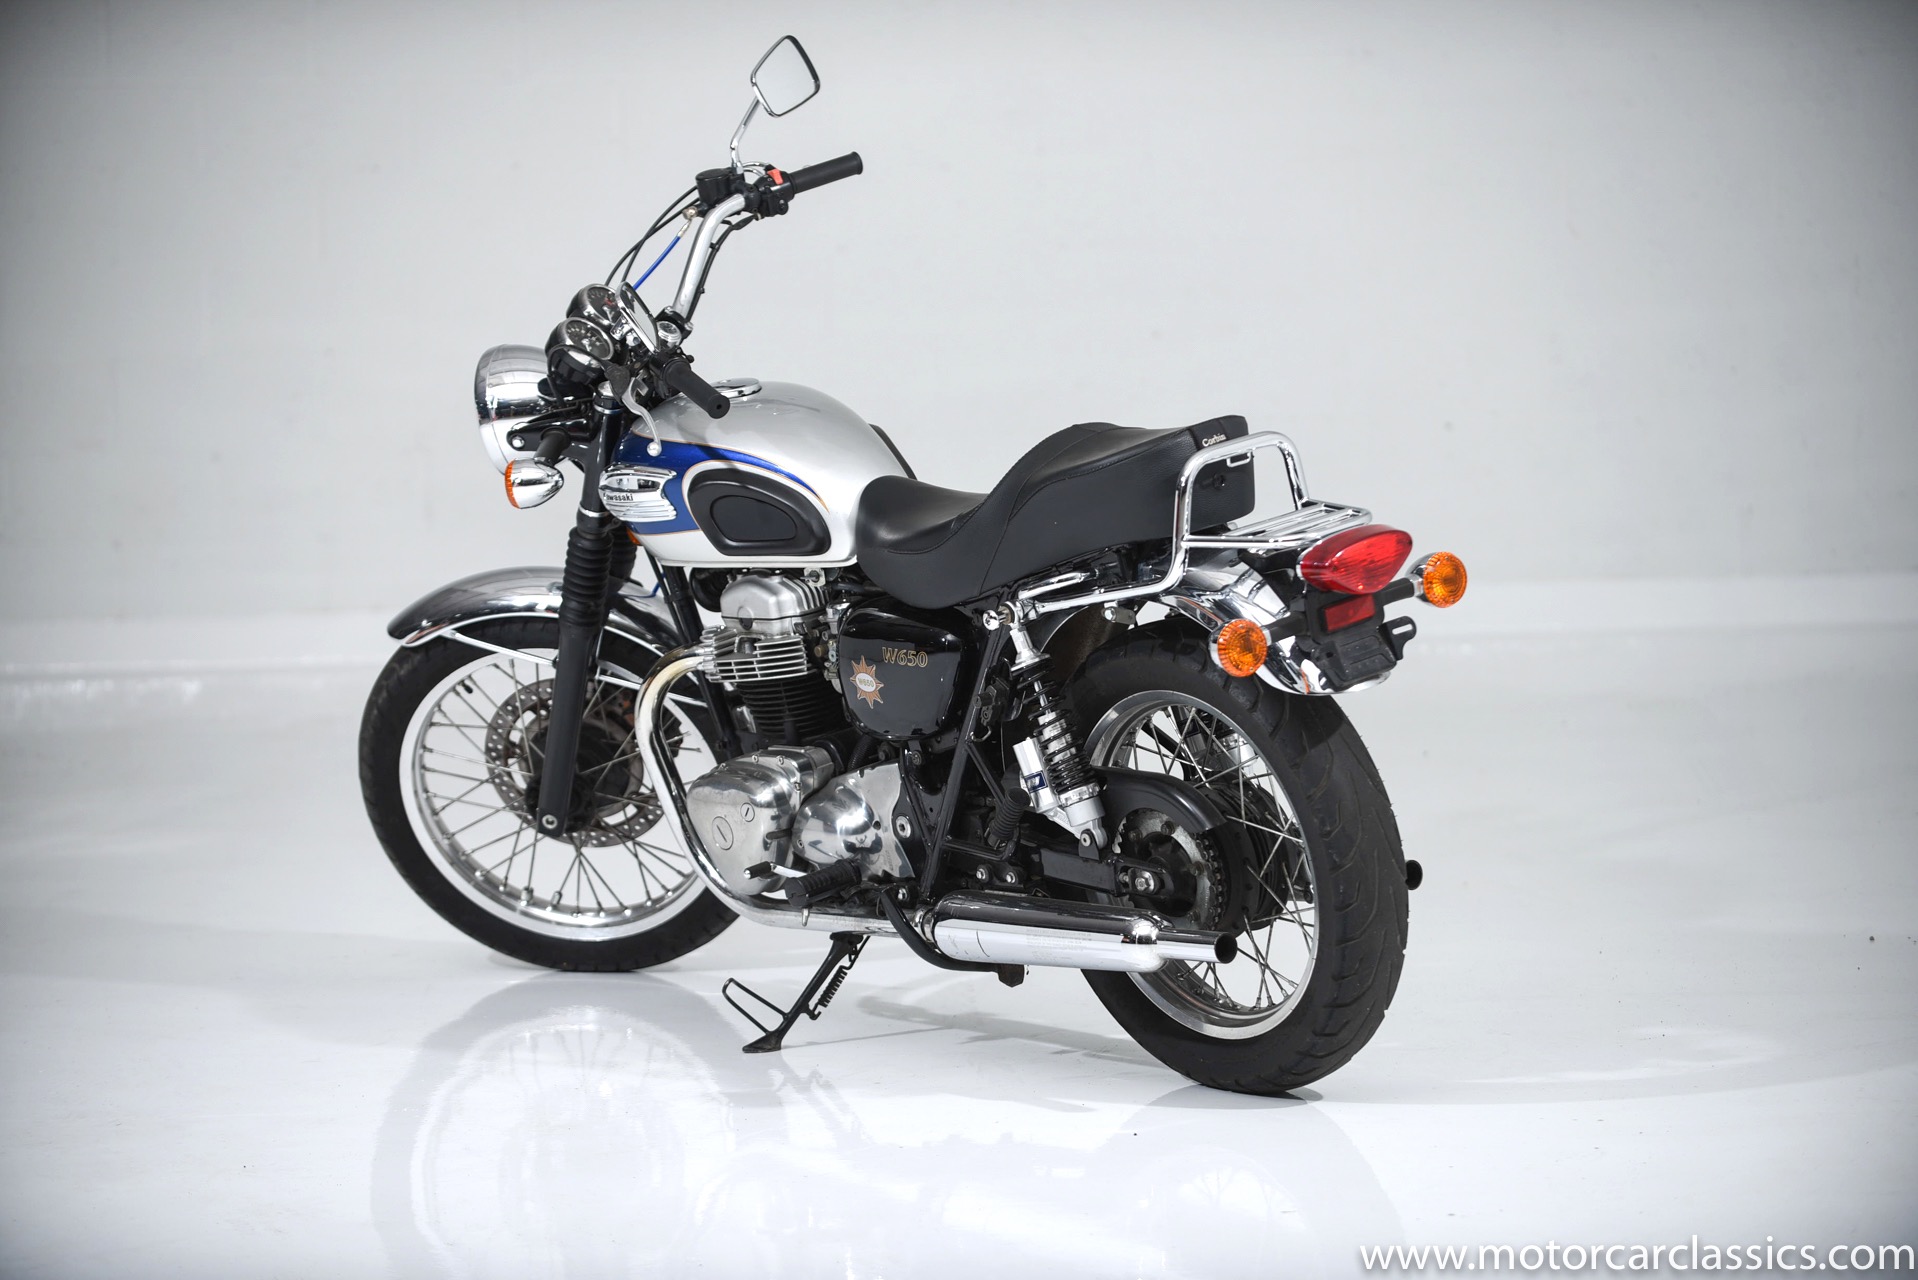 Used 2000 Kawasaki W650 For Sale ($4,900) | Motorcar Classics Stock #1458